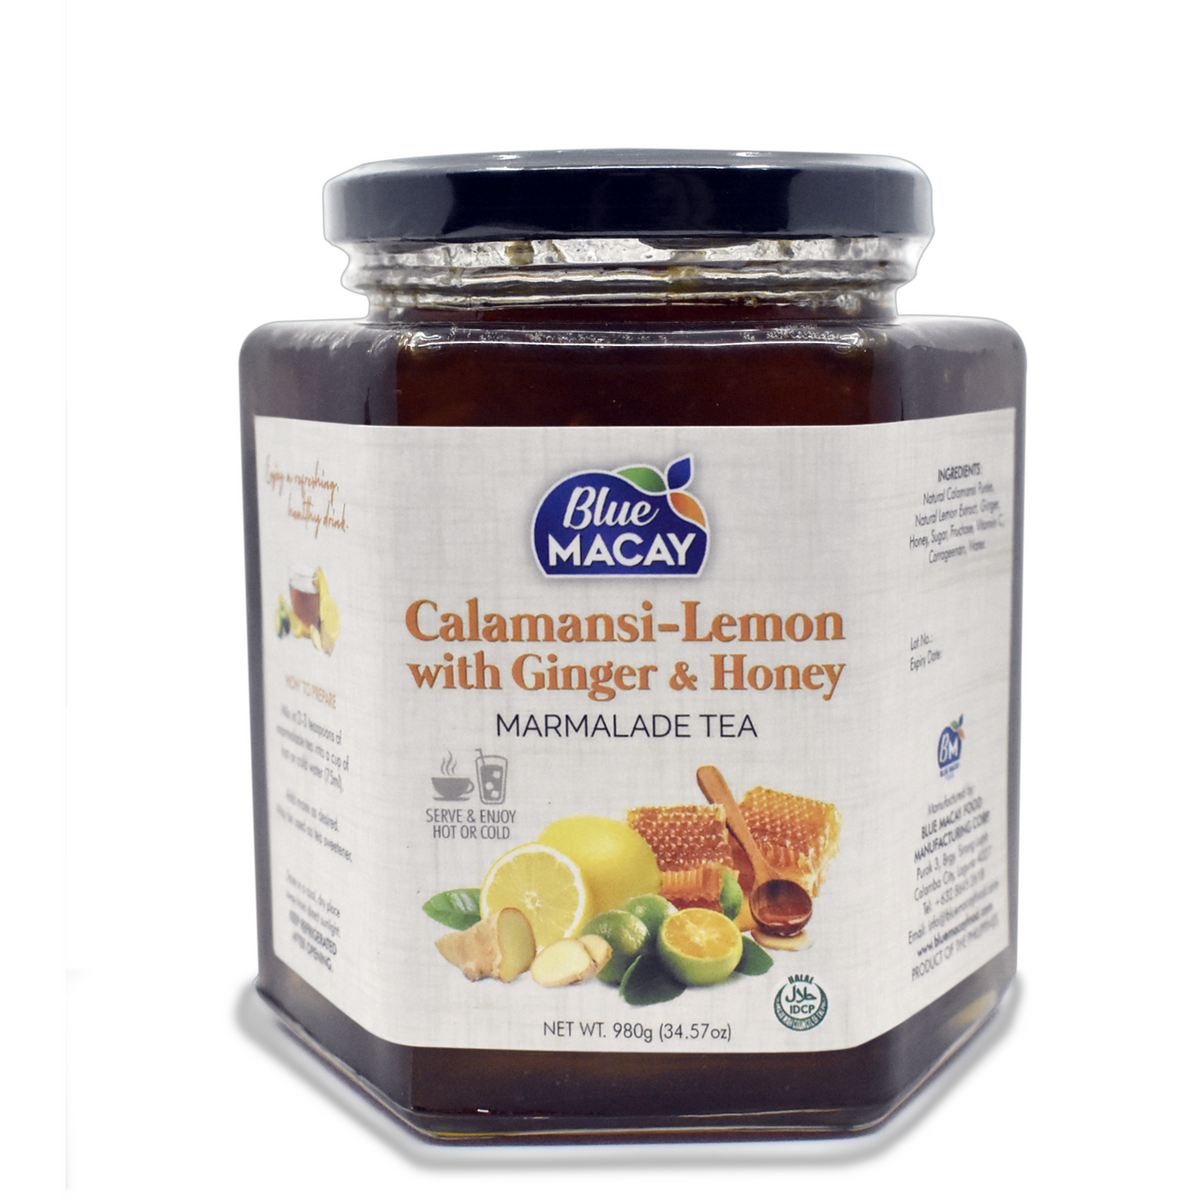 Calamansi-Lemon with Honey & Ginger MARMALADE TEA